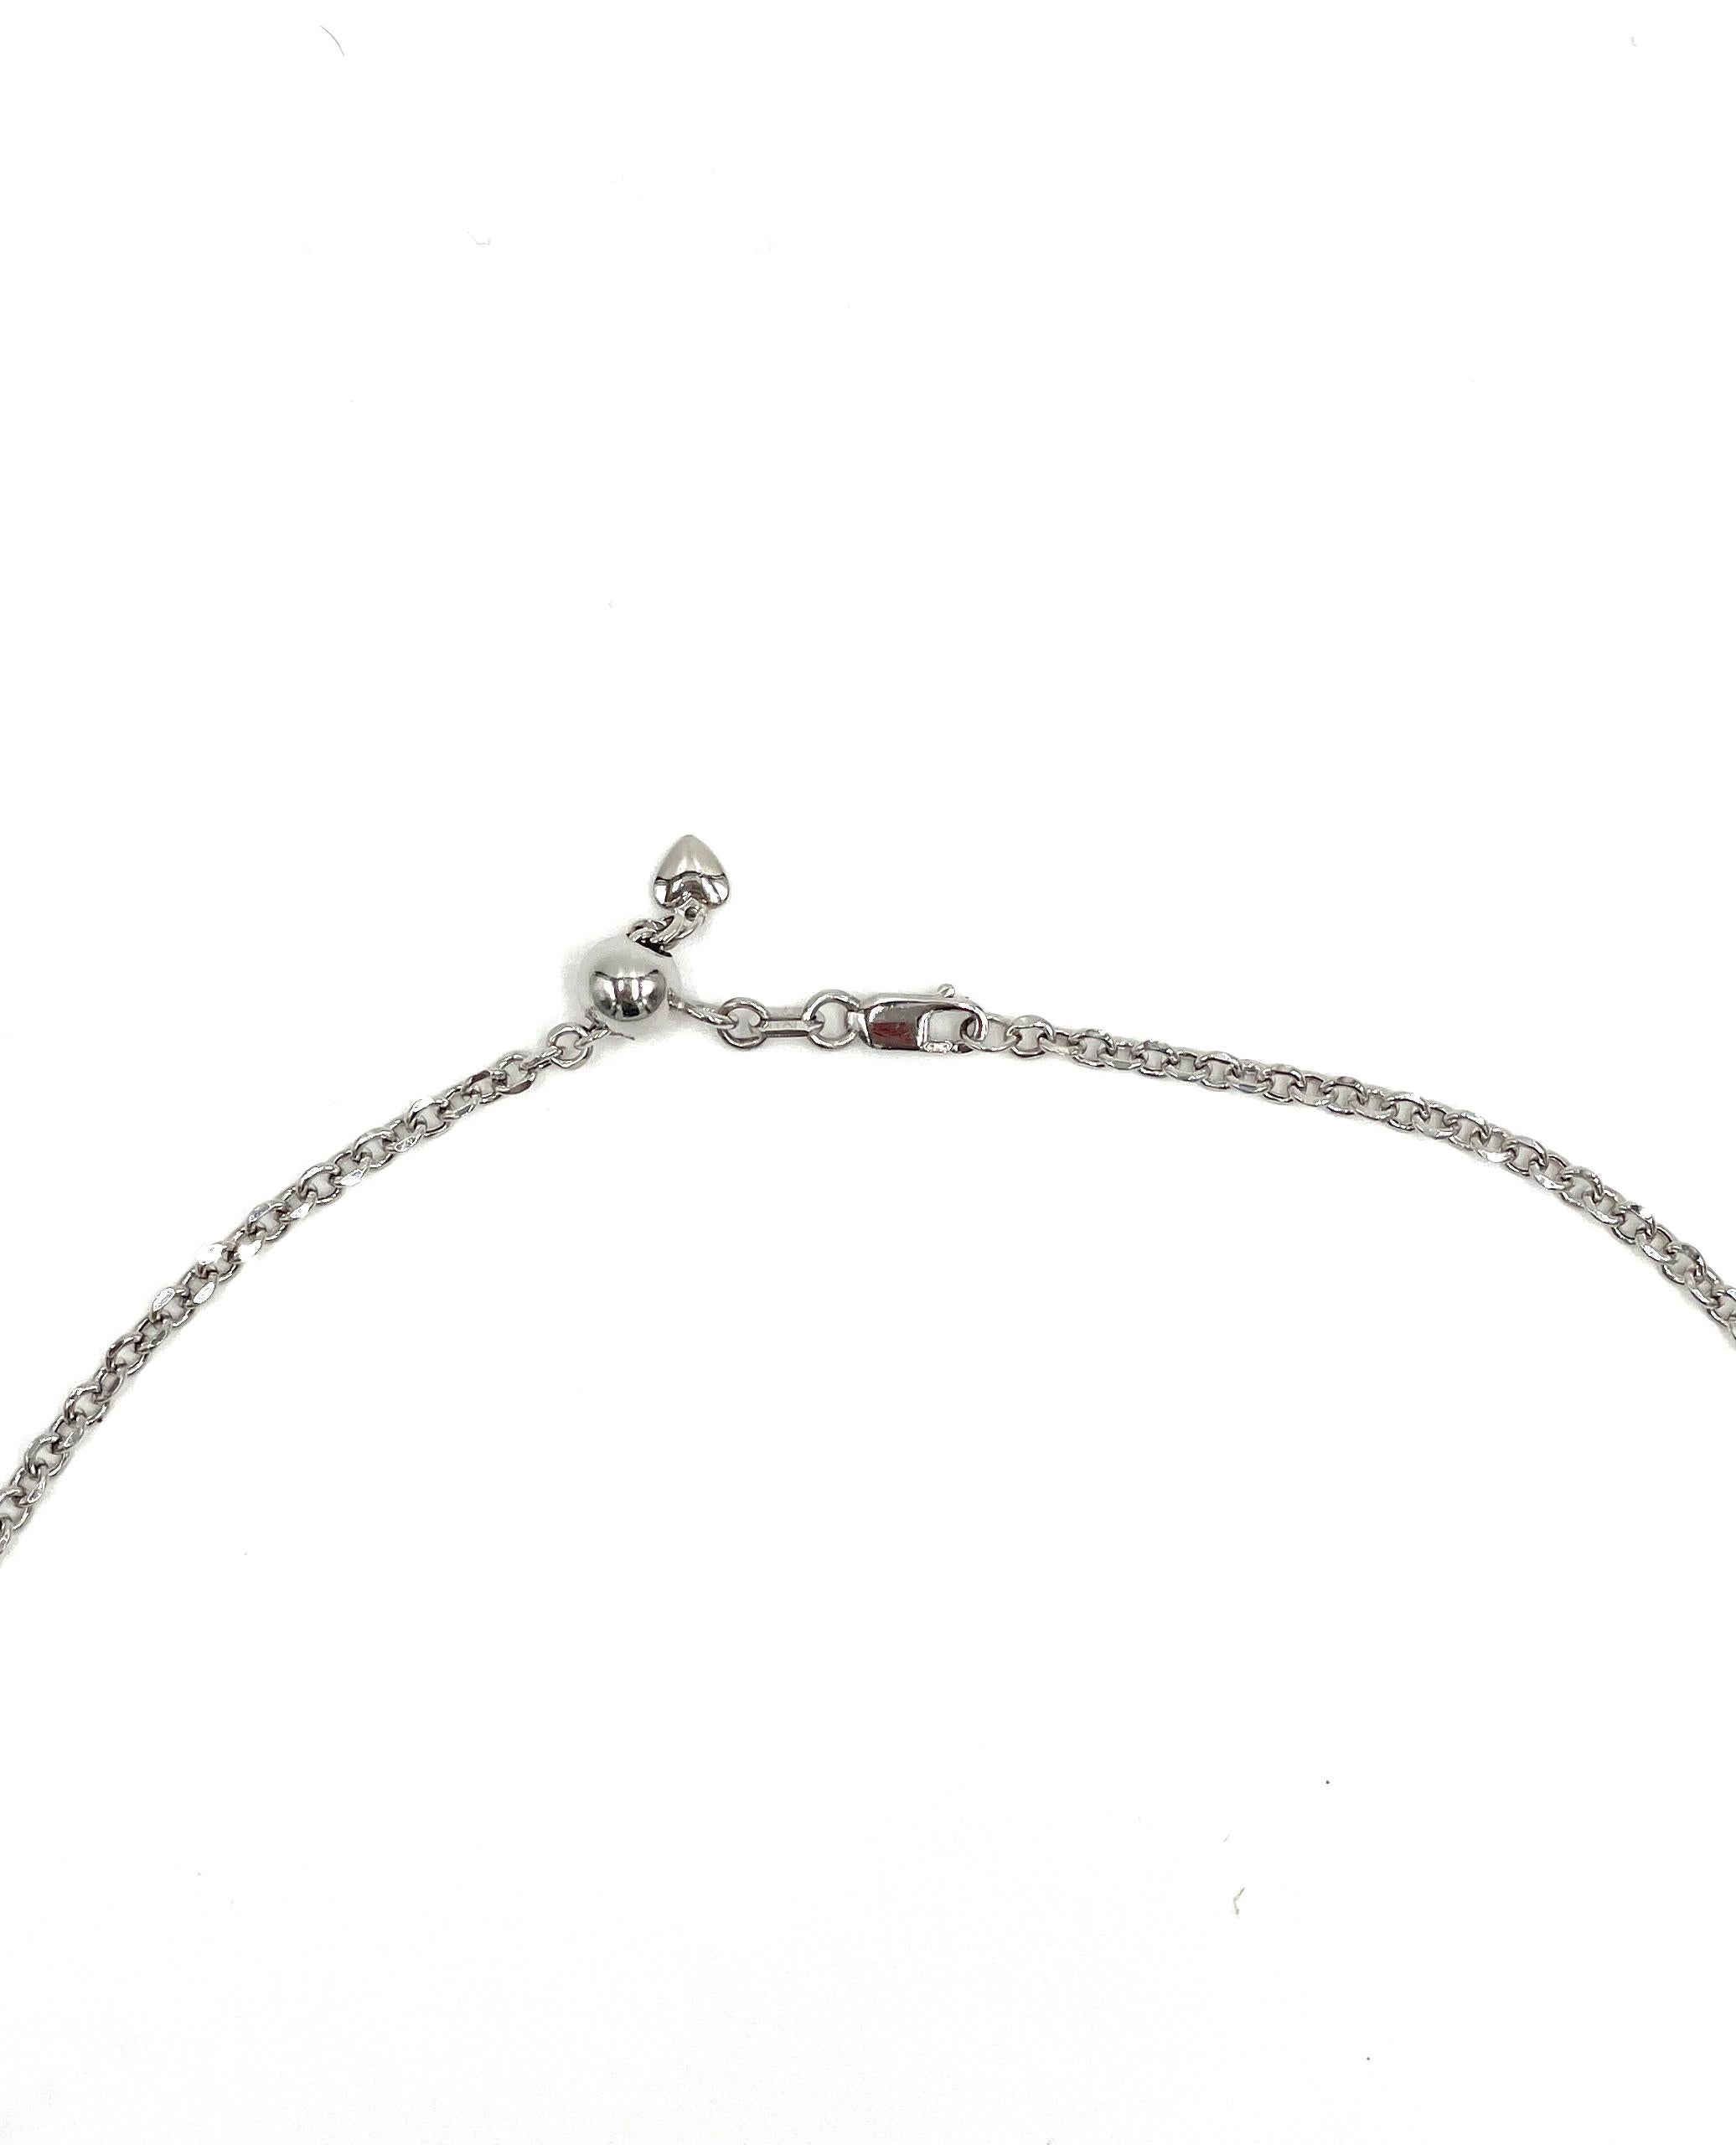 Kunzite Pendant Necklace in 14K White Gold and Diamonds 1